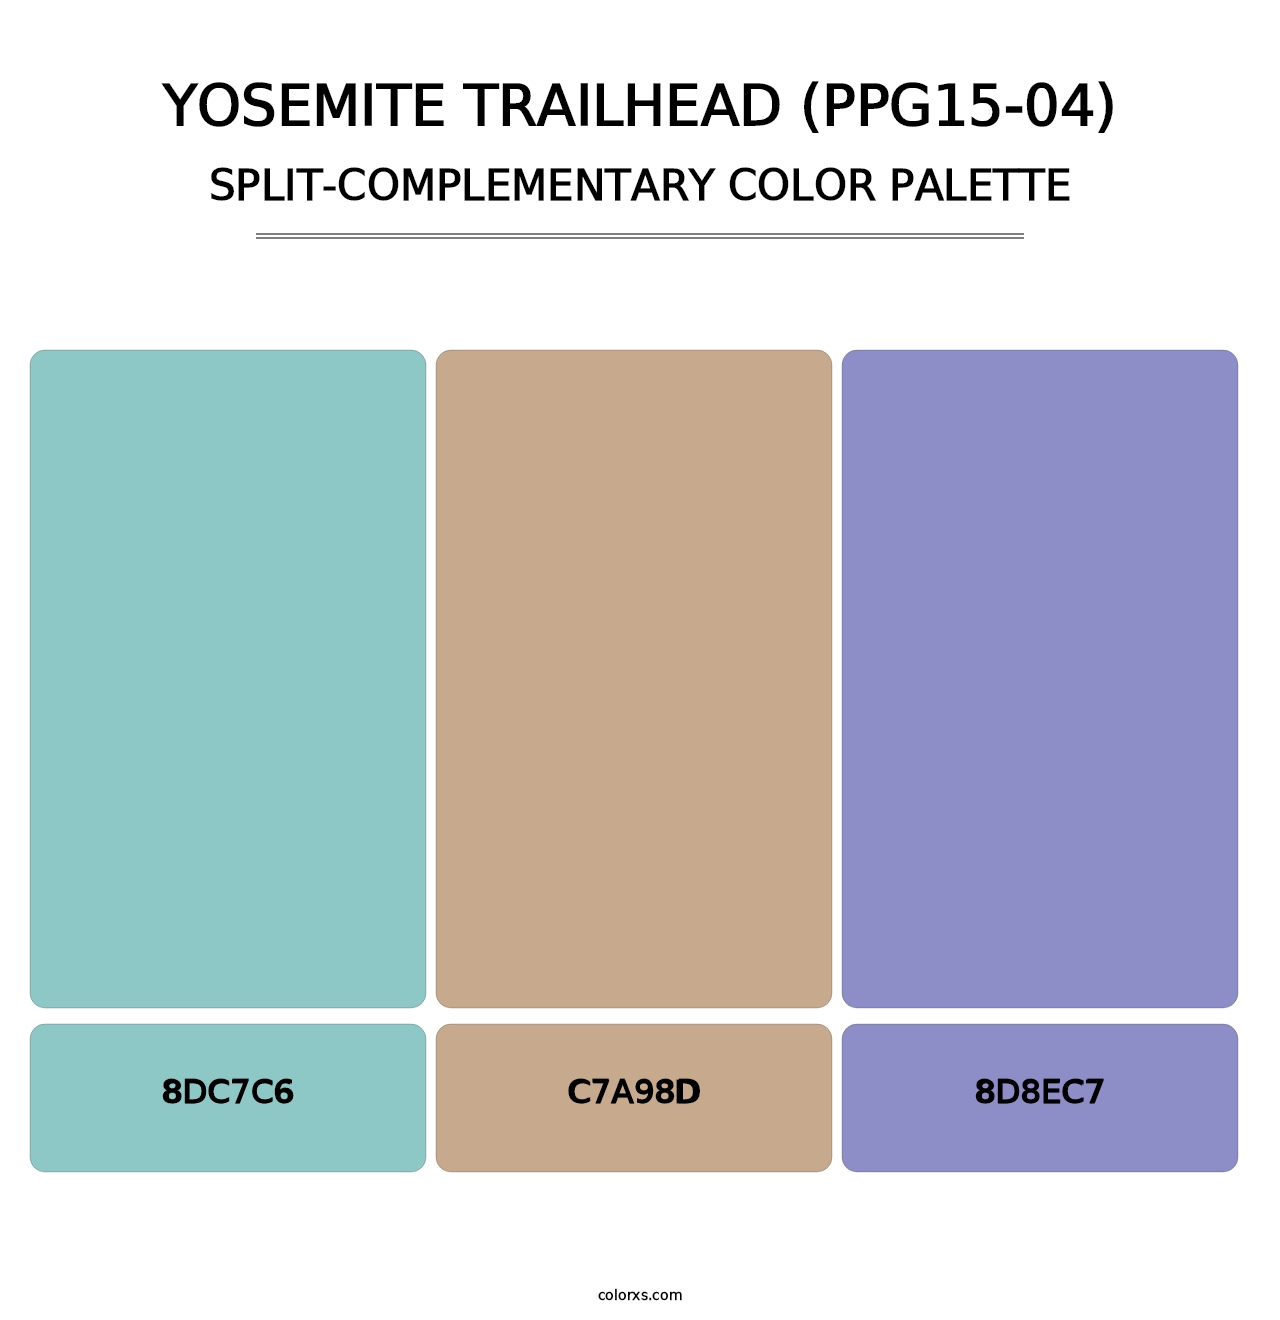 Yosemite Trailhead (PPG15-04) - Split-Complementary Color Palette